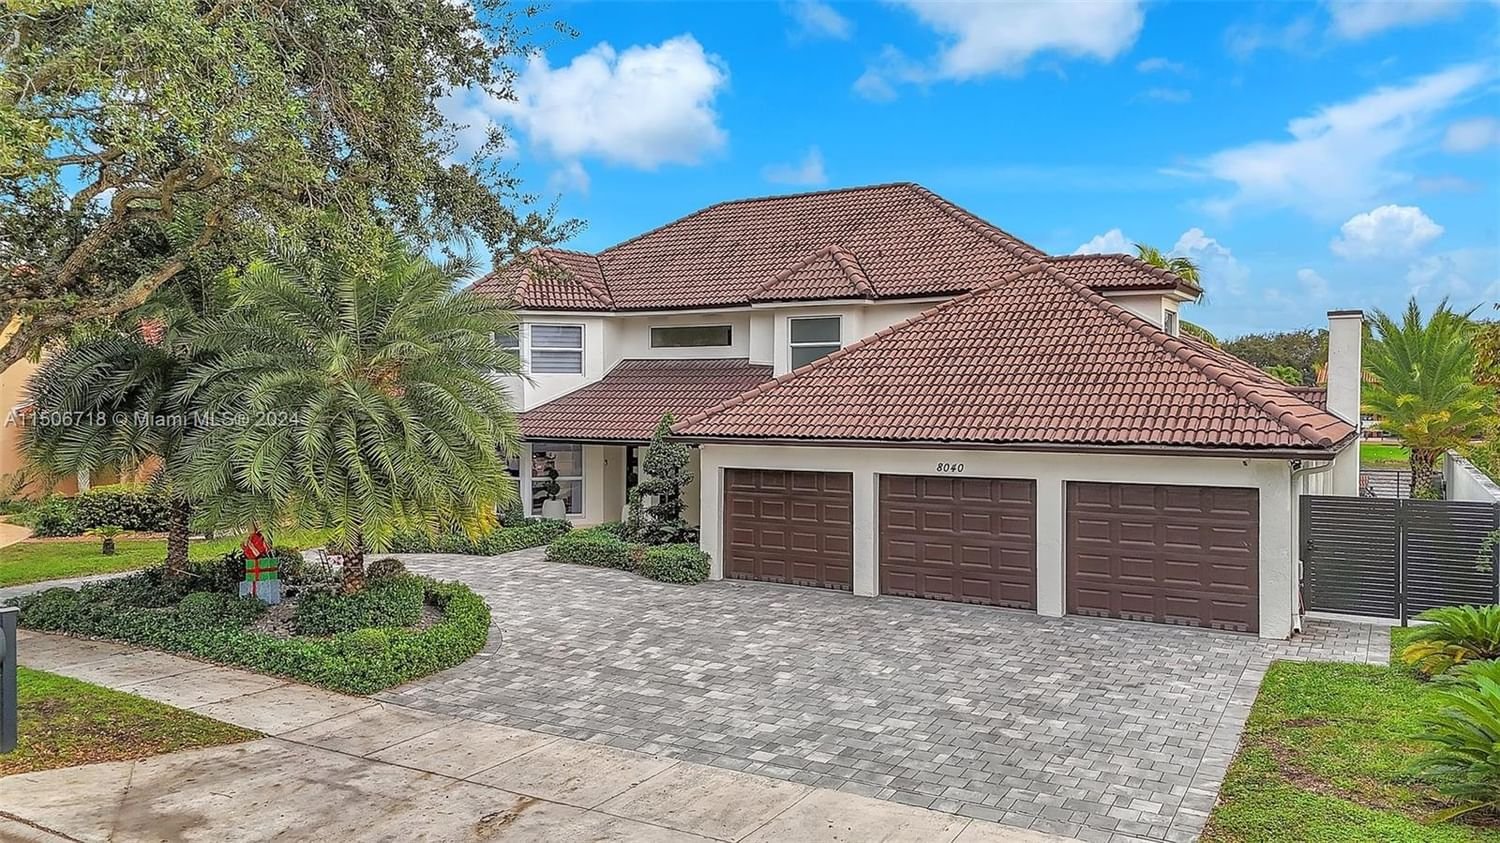 Real estate property located at 8040 167th Ter, Miami-Dade County, ROYAL OAKS, Miami Lakes, FL